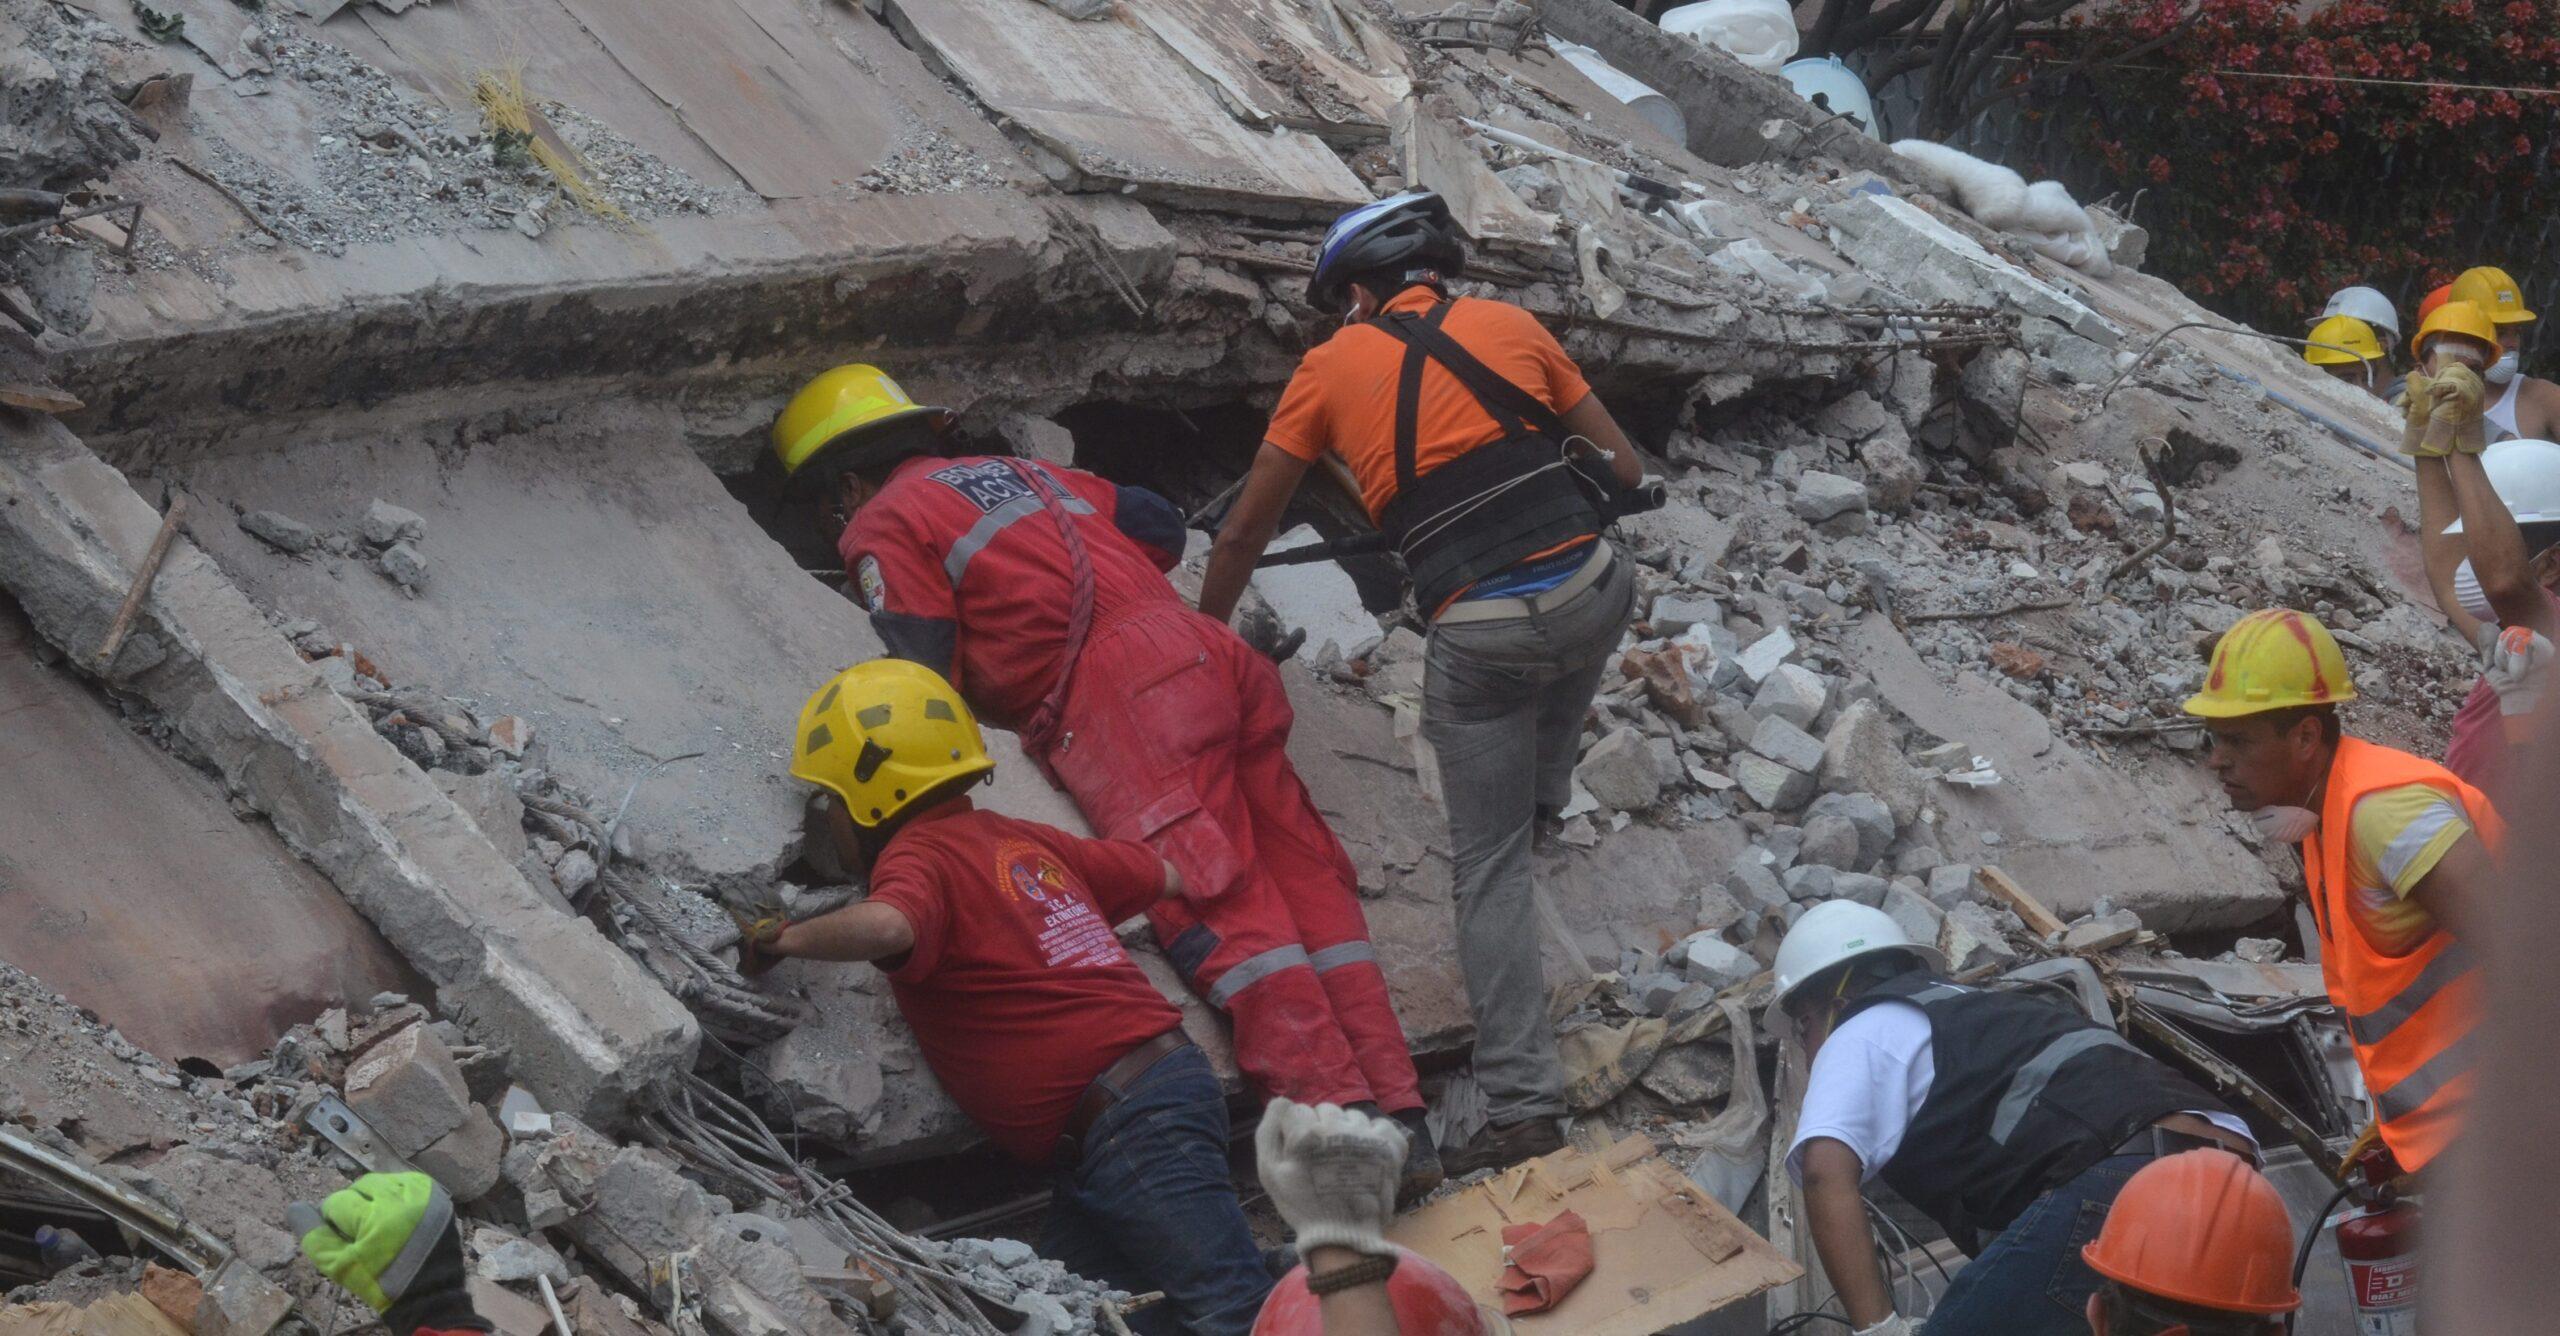 Abuela e hija sobreviven al sismo: así es como esta familia evitó una doble tragedia